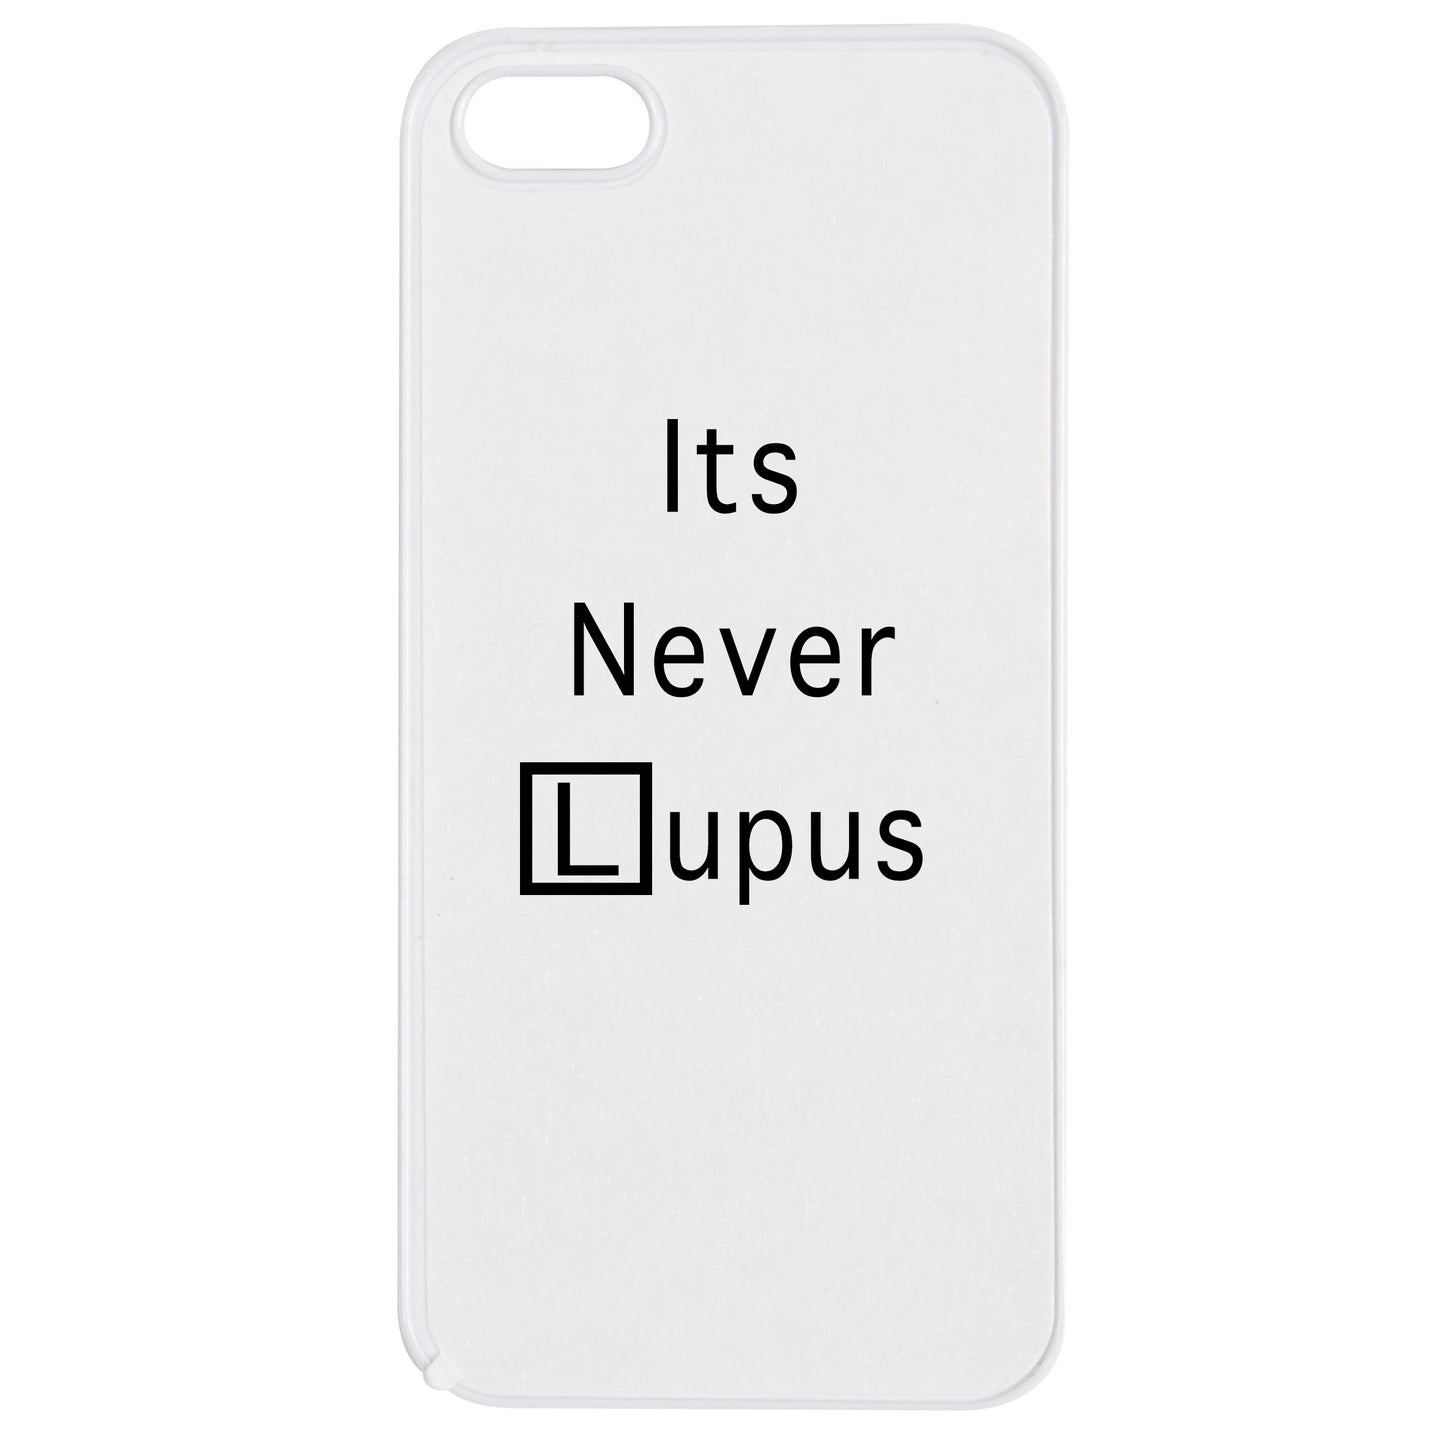 'It's Never Lupus' Phone Case - iPhone 5 & 5s